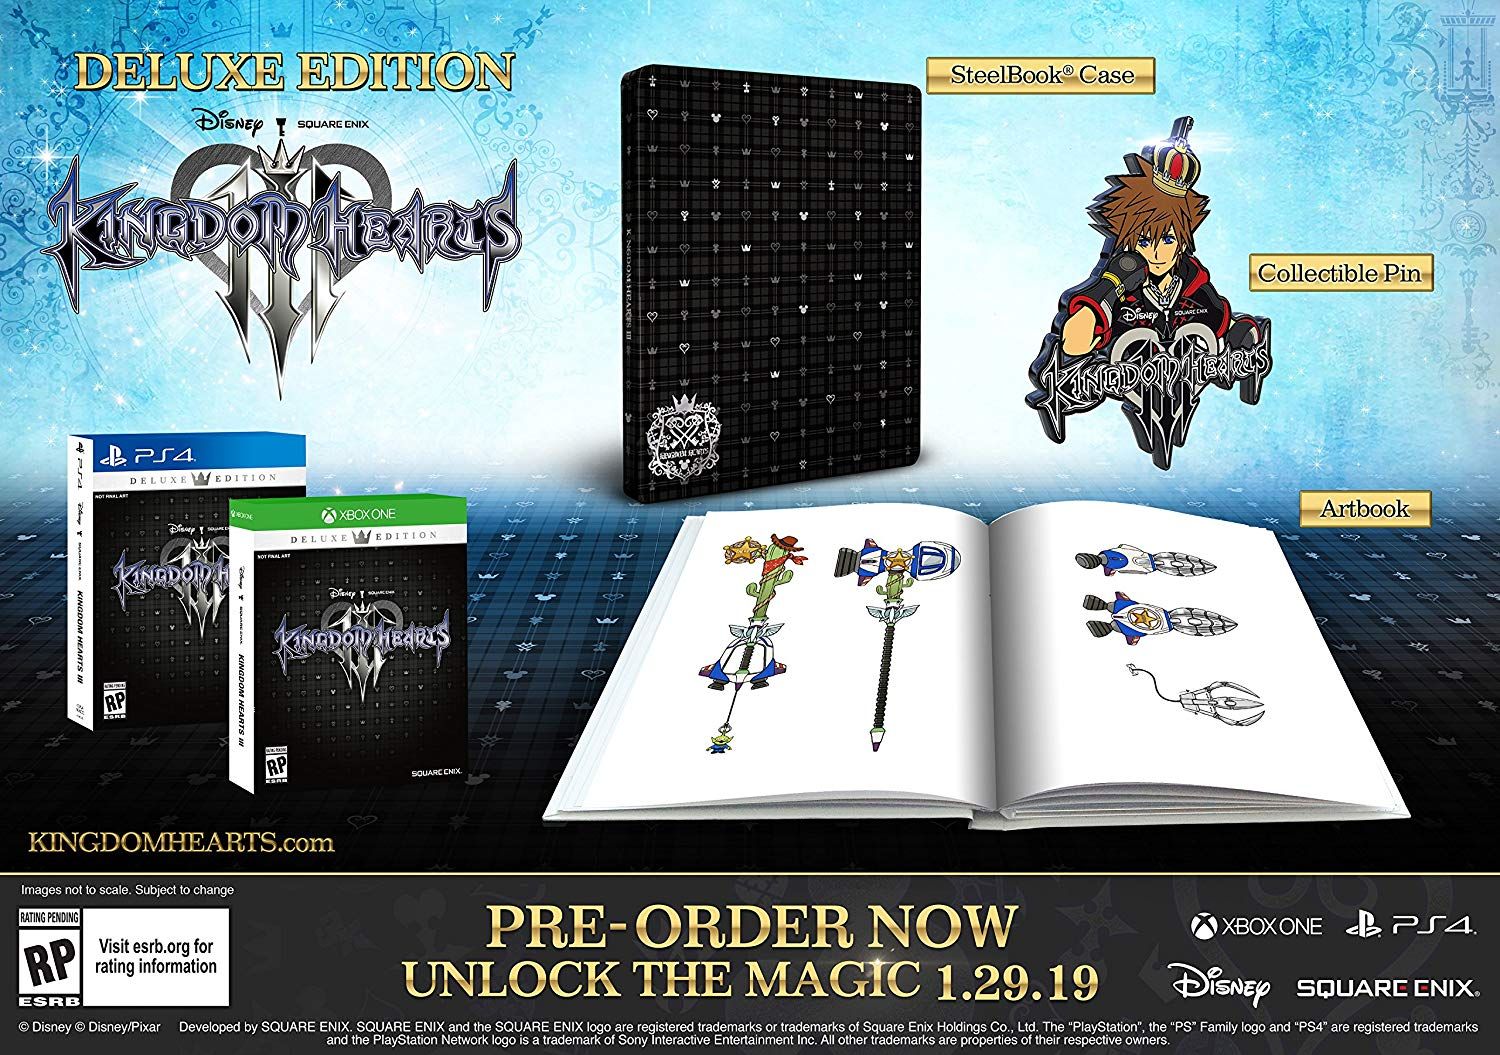 kingdom hearts 3 deluxe edition xbox one preorder